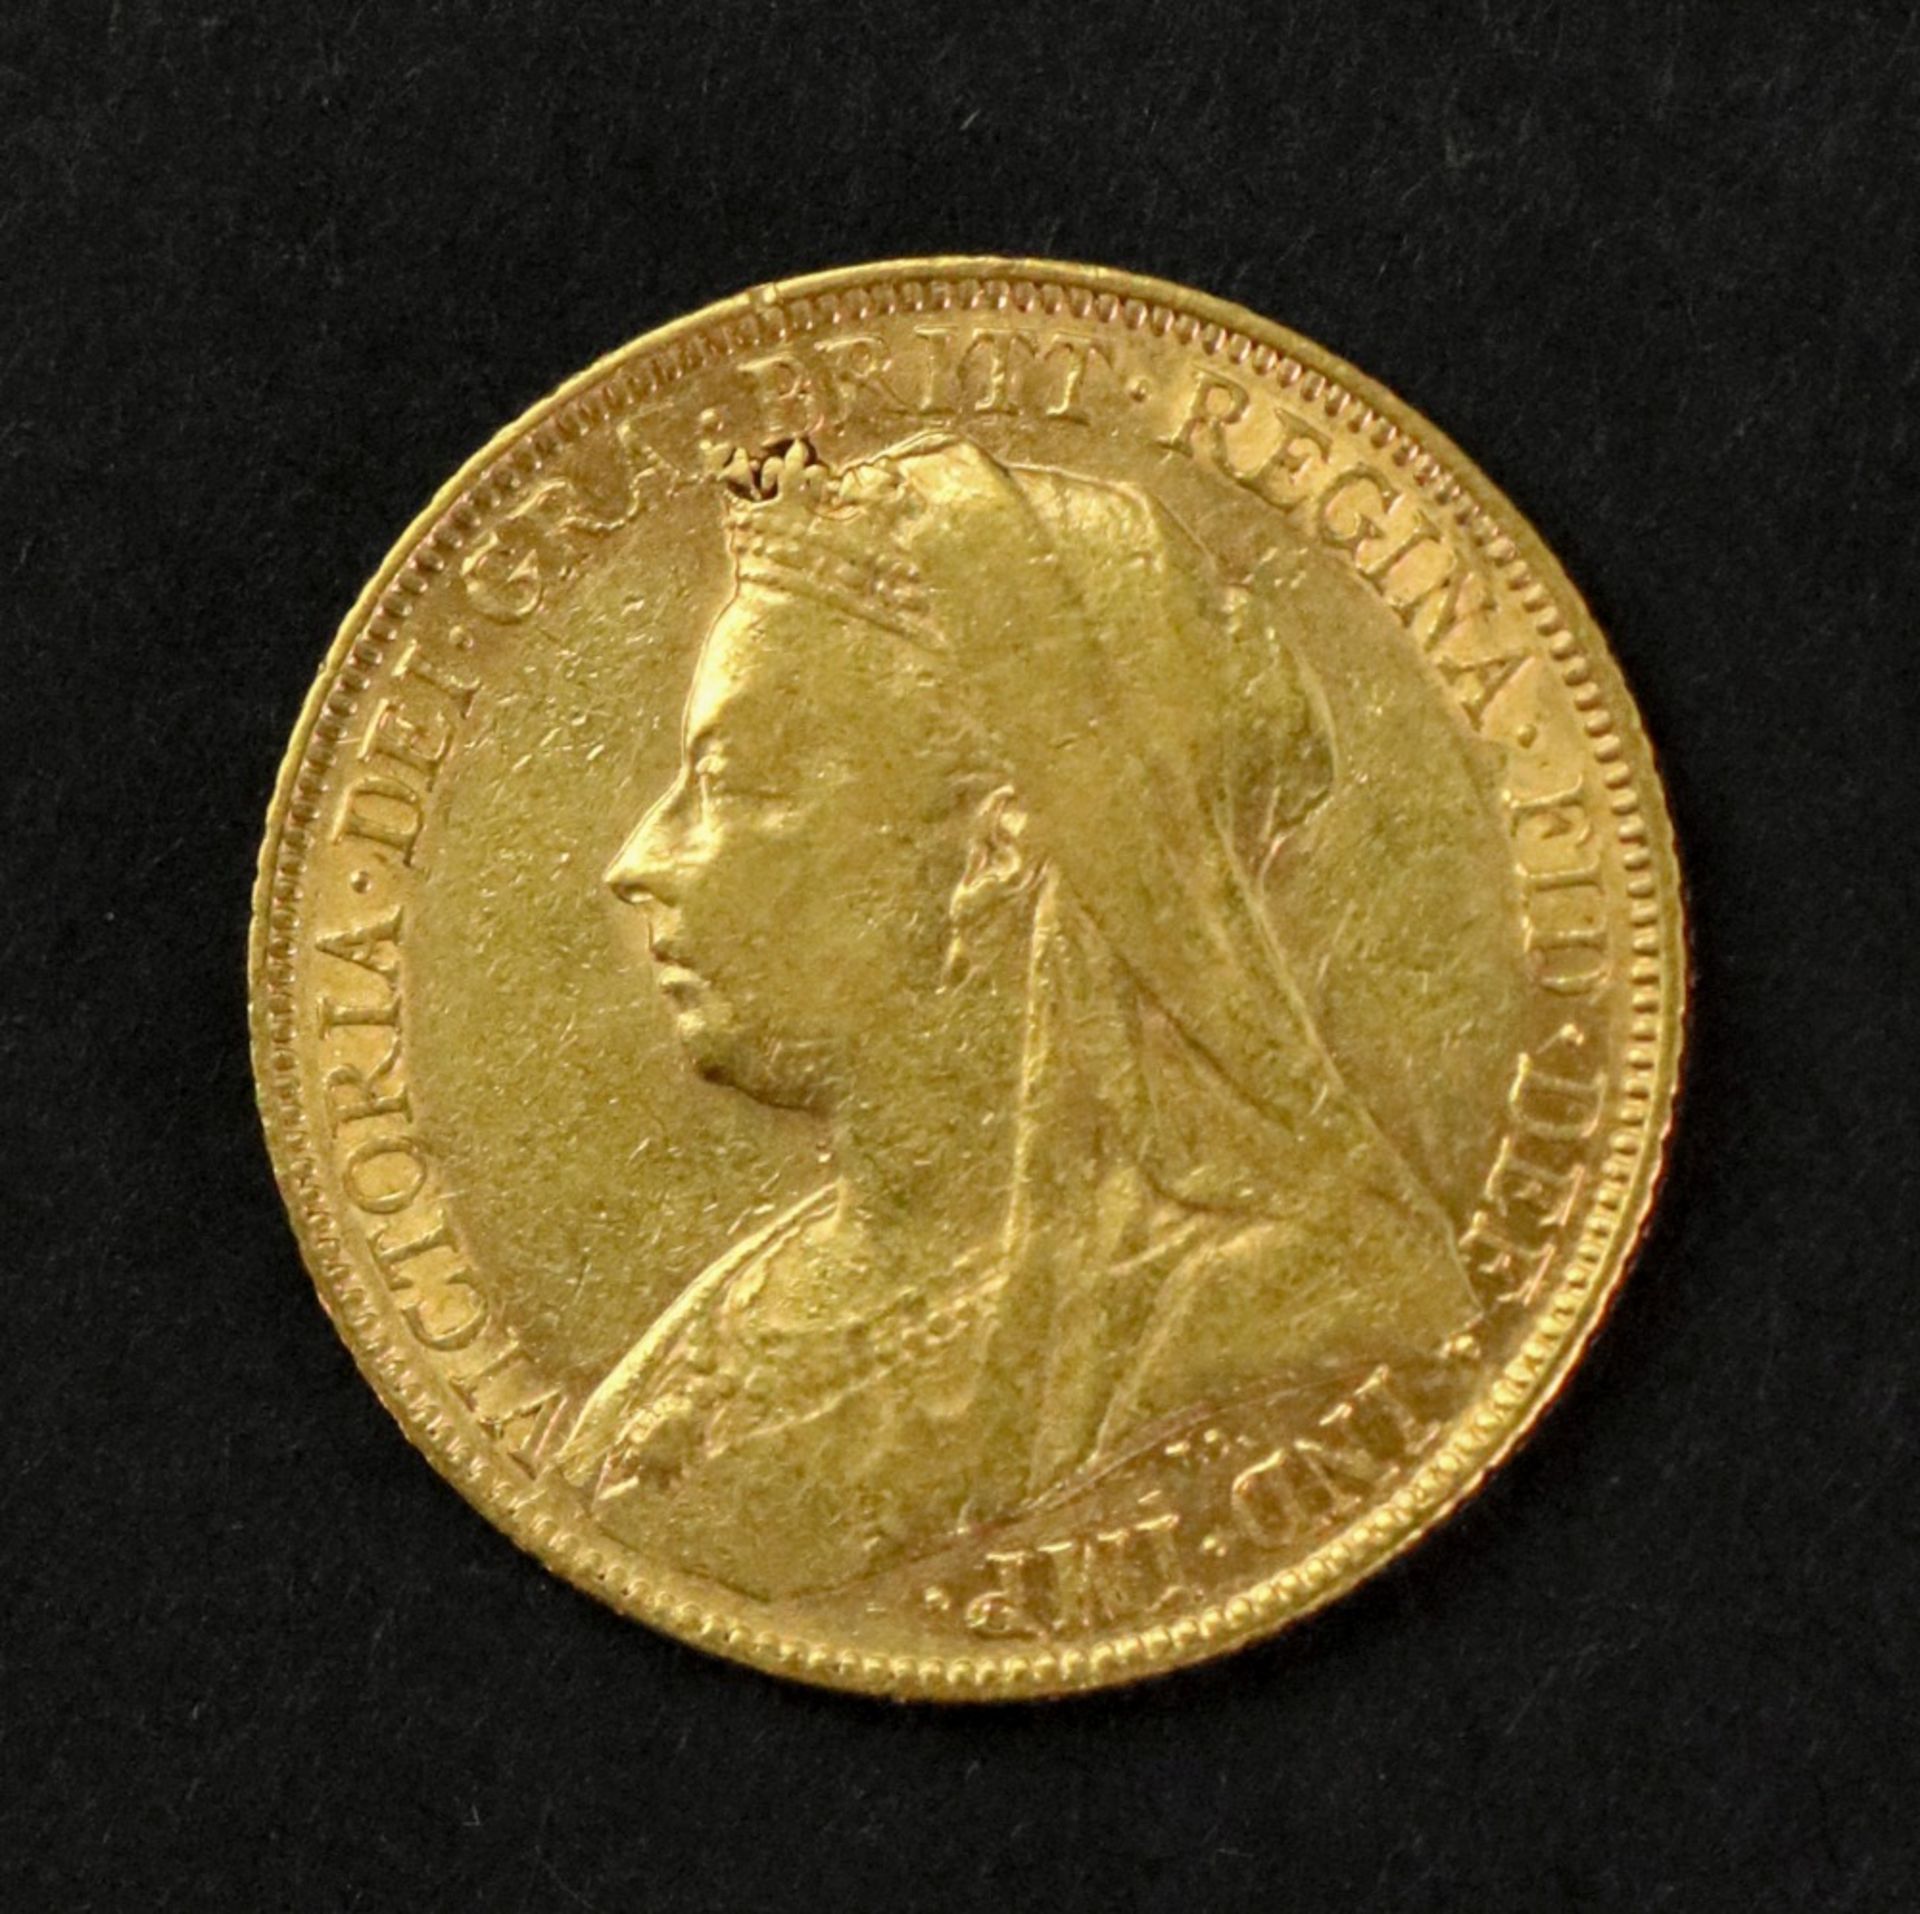 Queen Victoria sovereign 1899. - Image 2 of 3